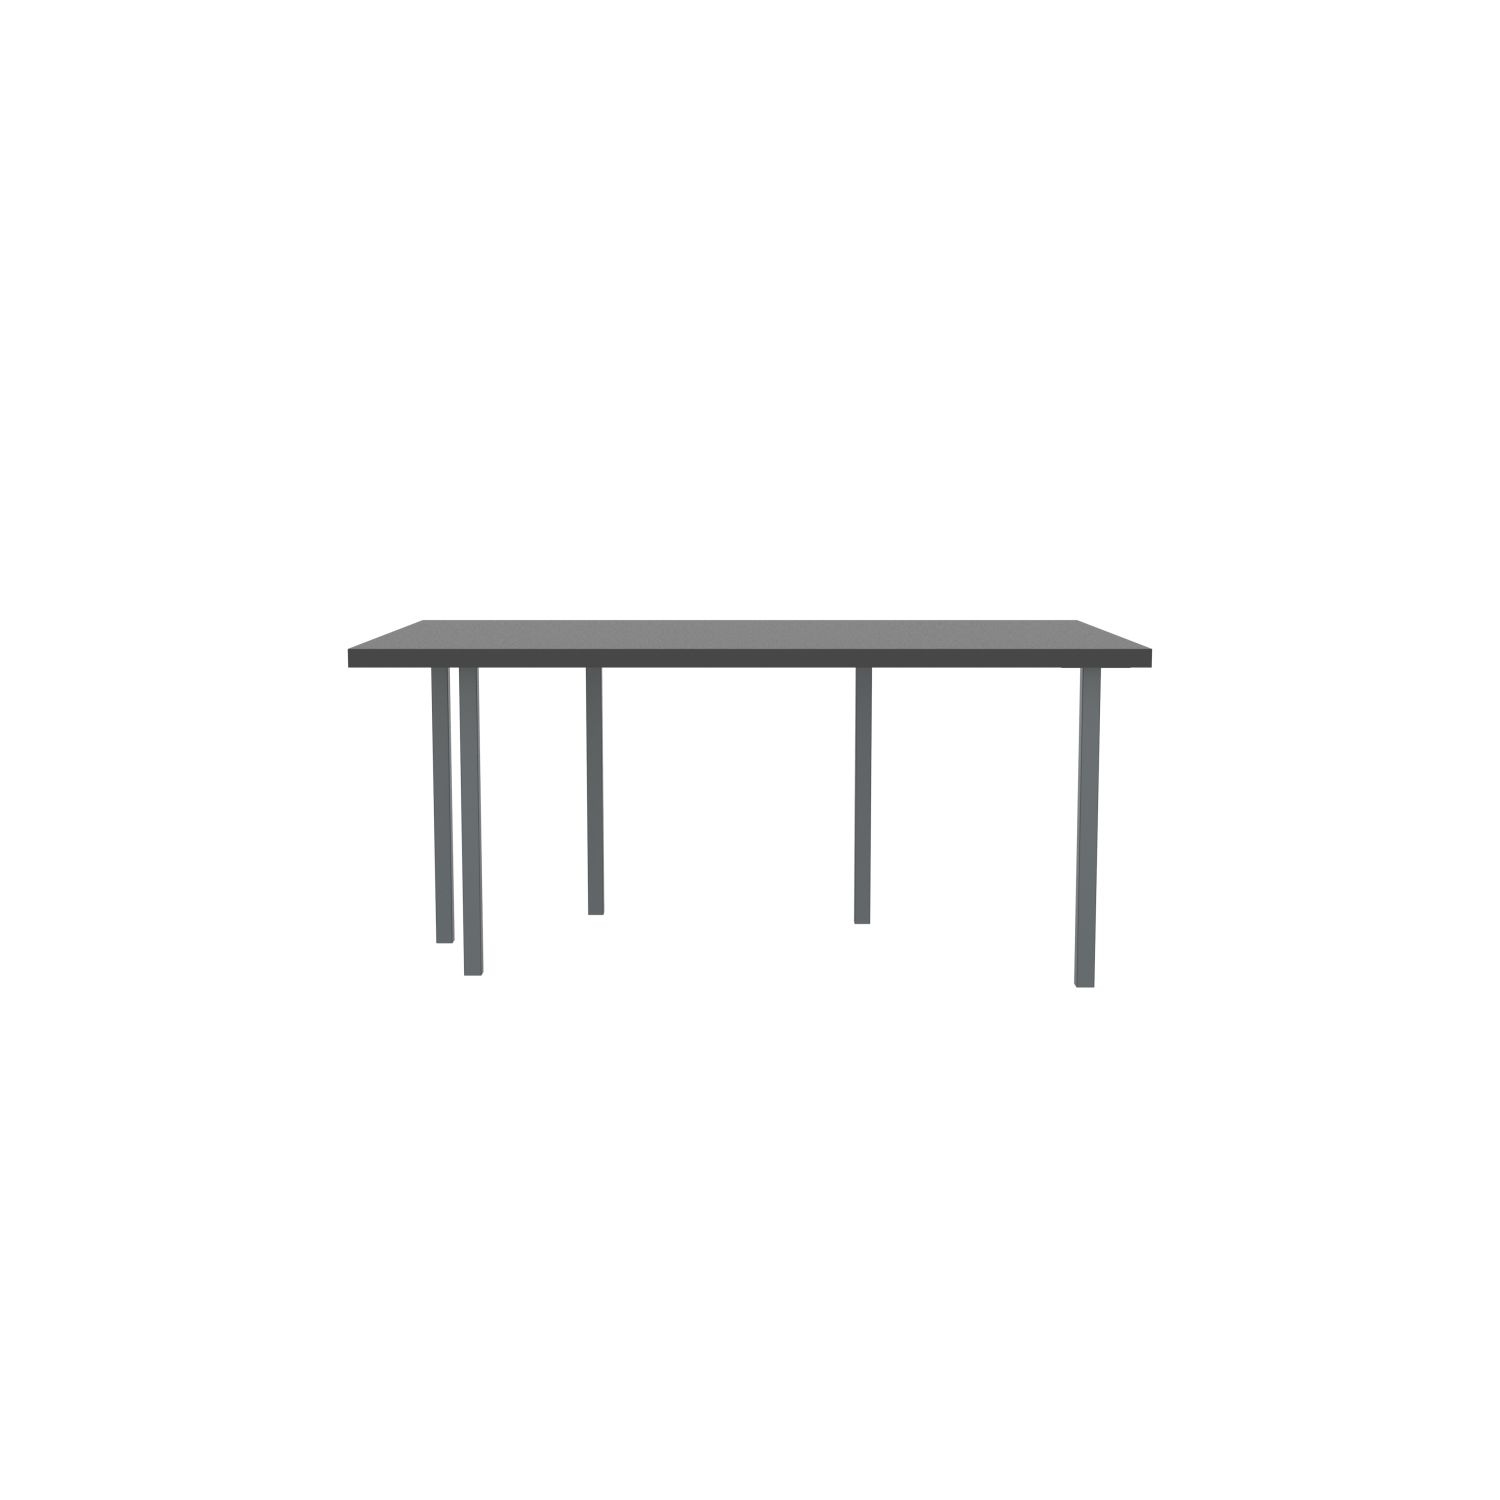 lensvelt bbrand table five fixed heigt 103x172 hpl black 50 mm price level 1 dark grey ral7011